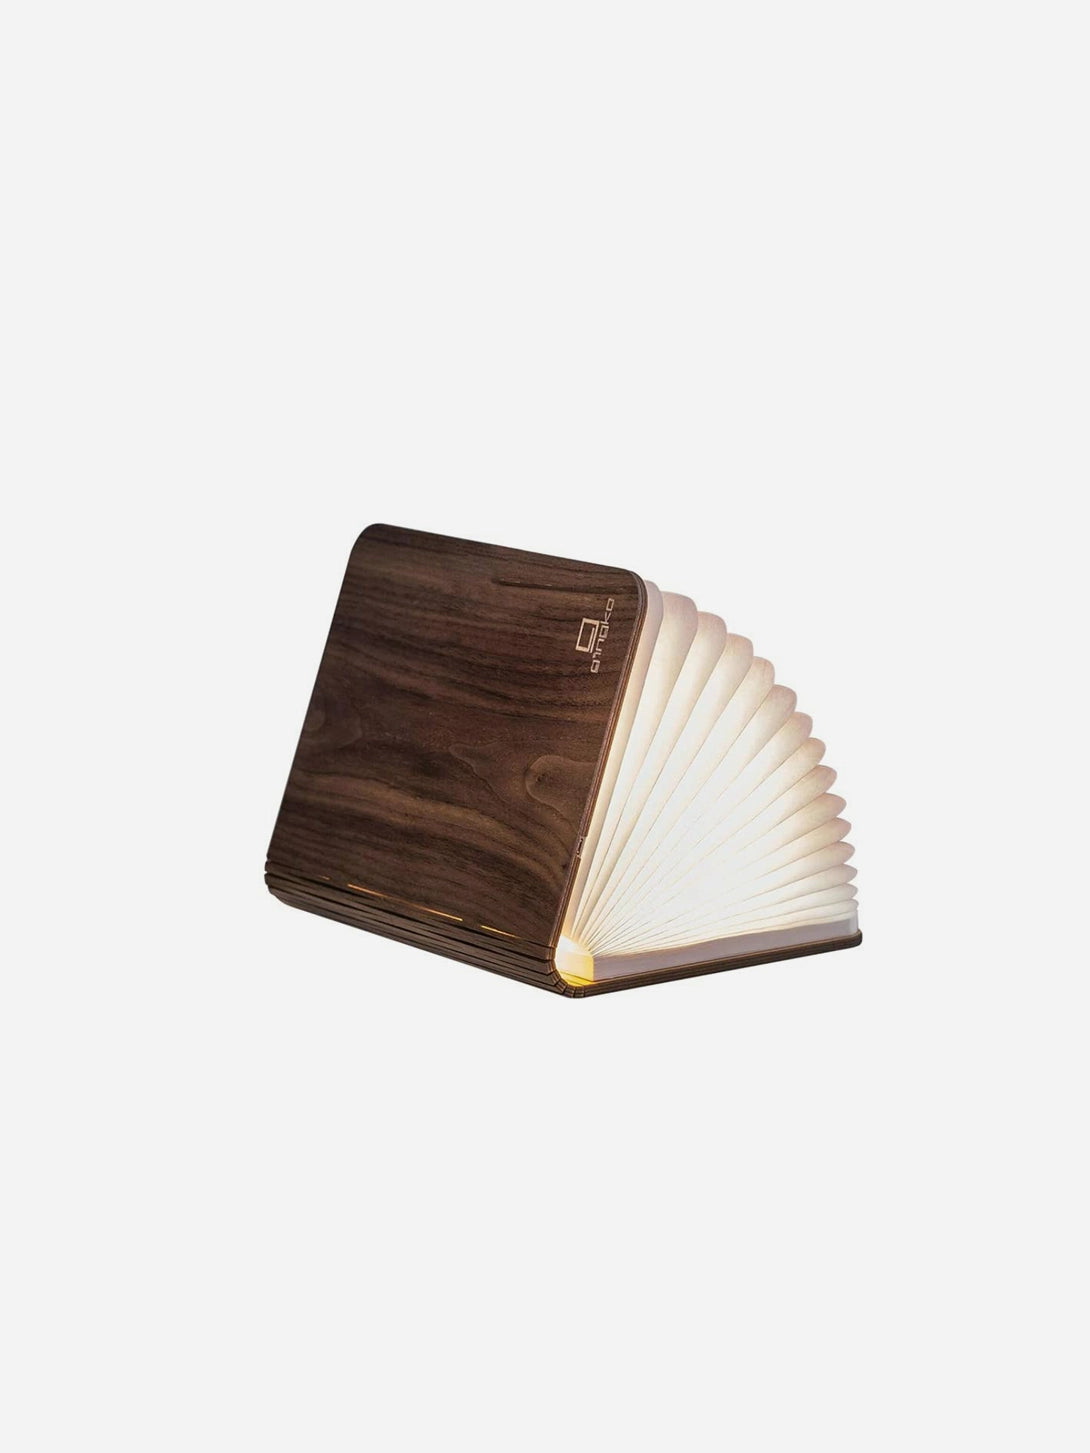 Brown Walnut Smart Book Gingko Nightstand Light Reading Lamp Bedside Table Nightlight Creative Ambient Lighting